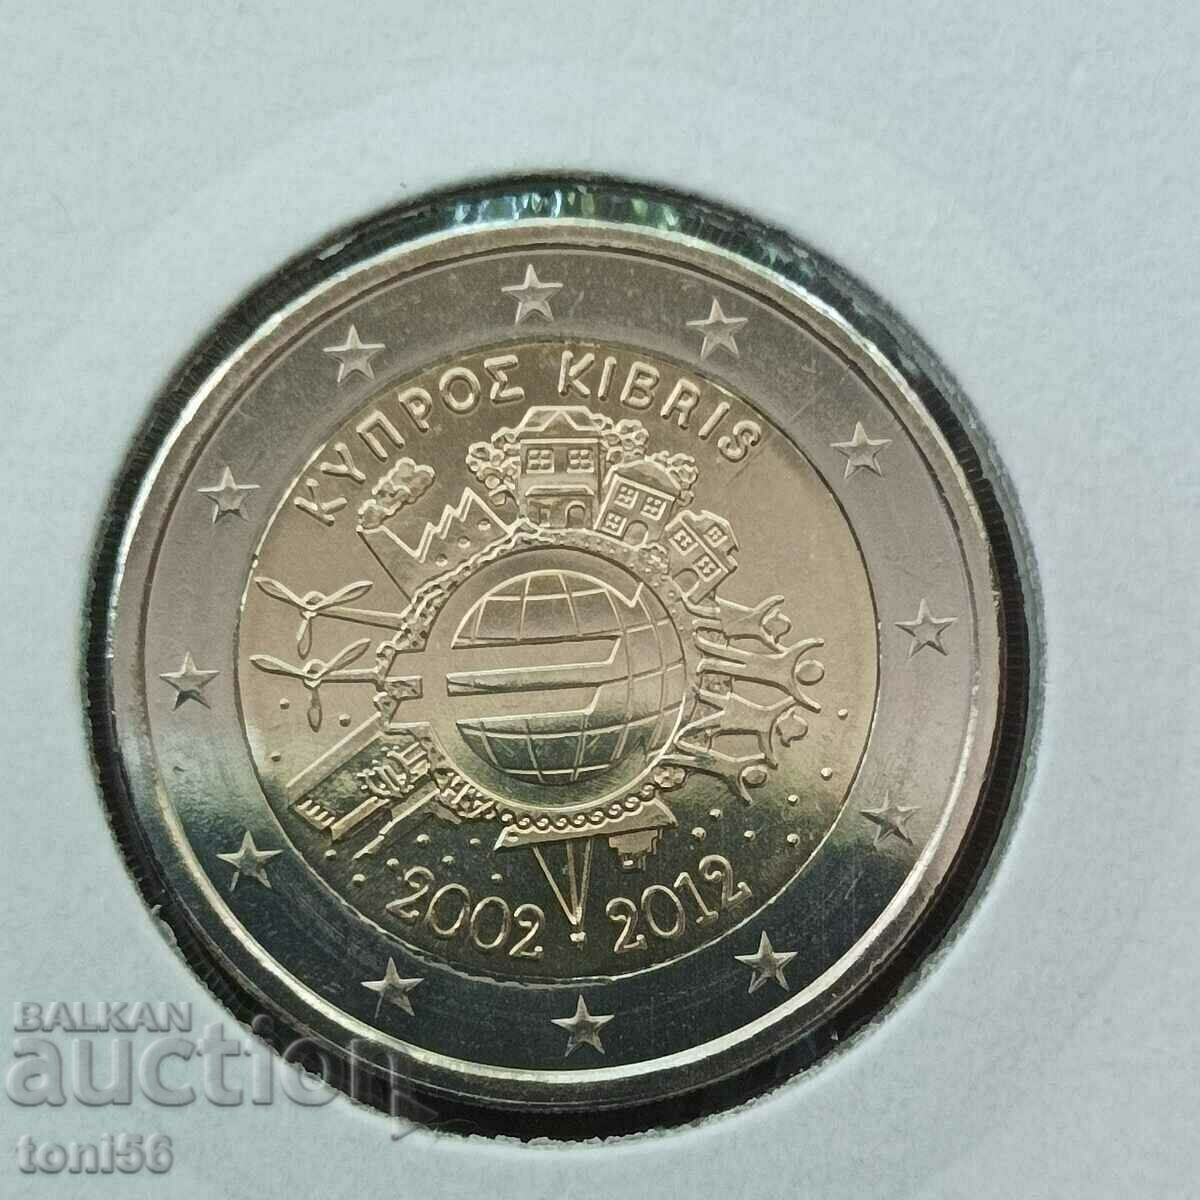 Cipru 2 euro 2012 - 10 ani „Monede și bancnote euro”